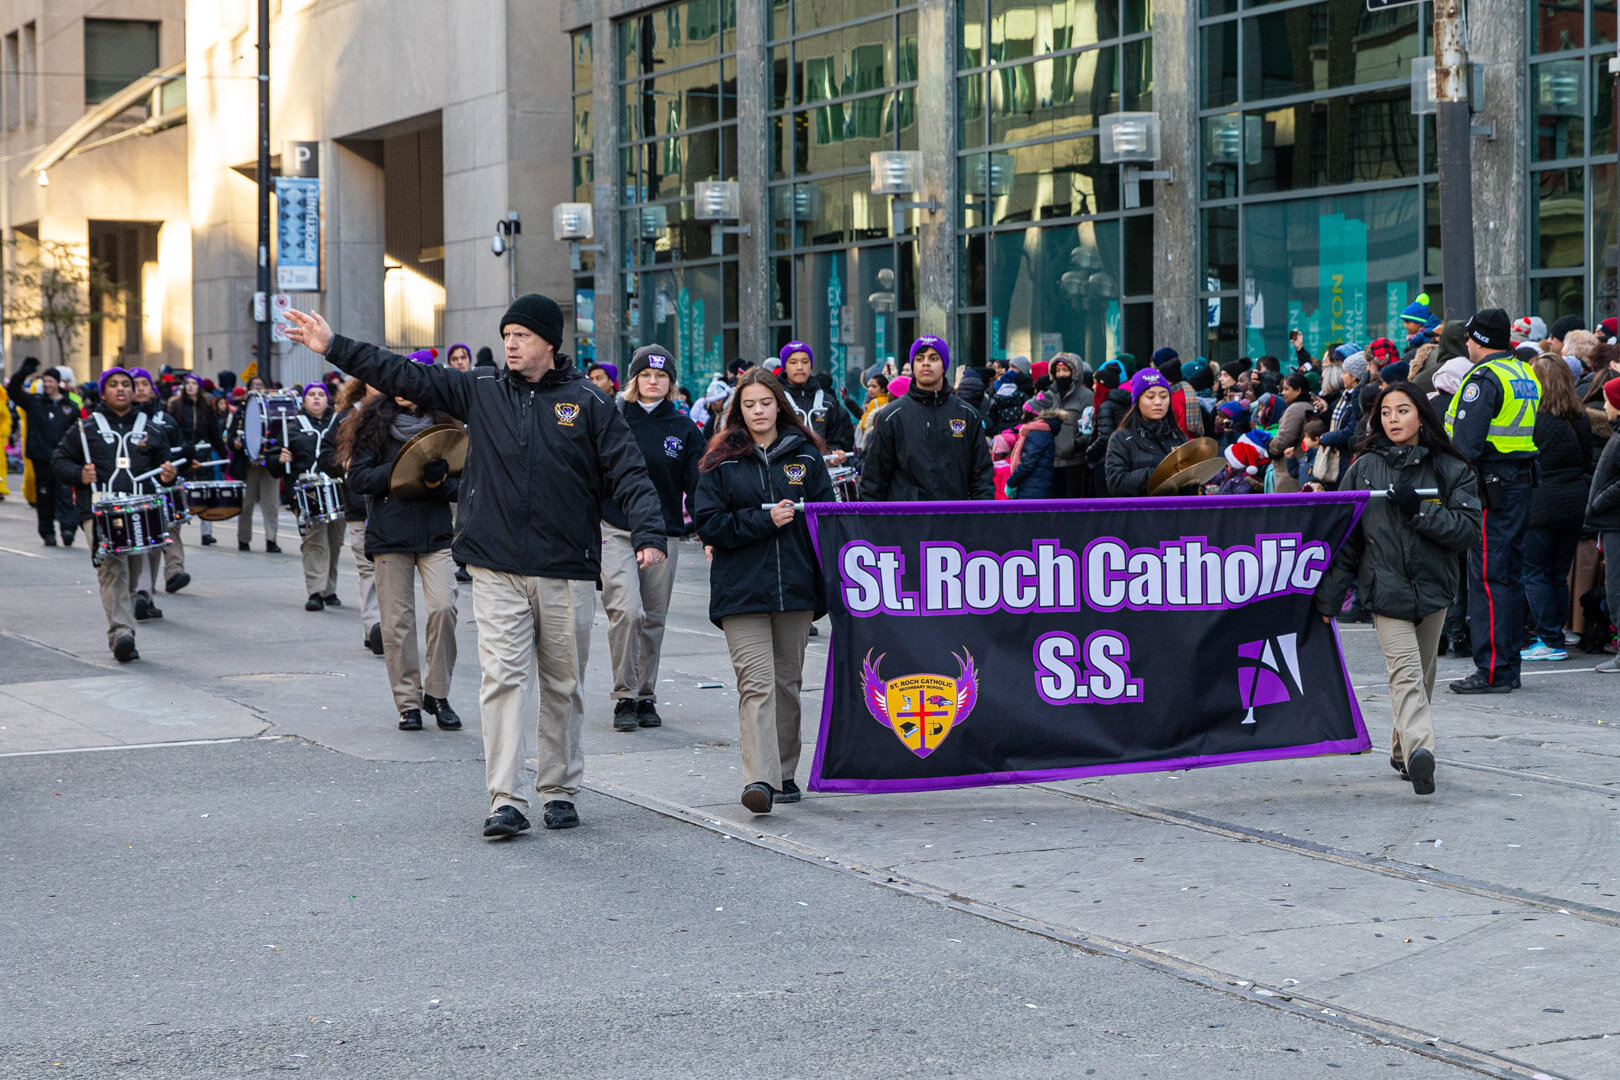 St. Roch Catholic S.S.